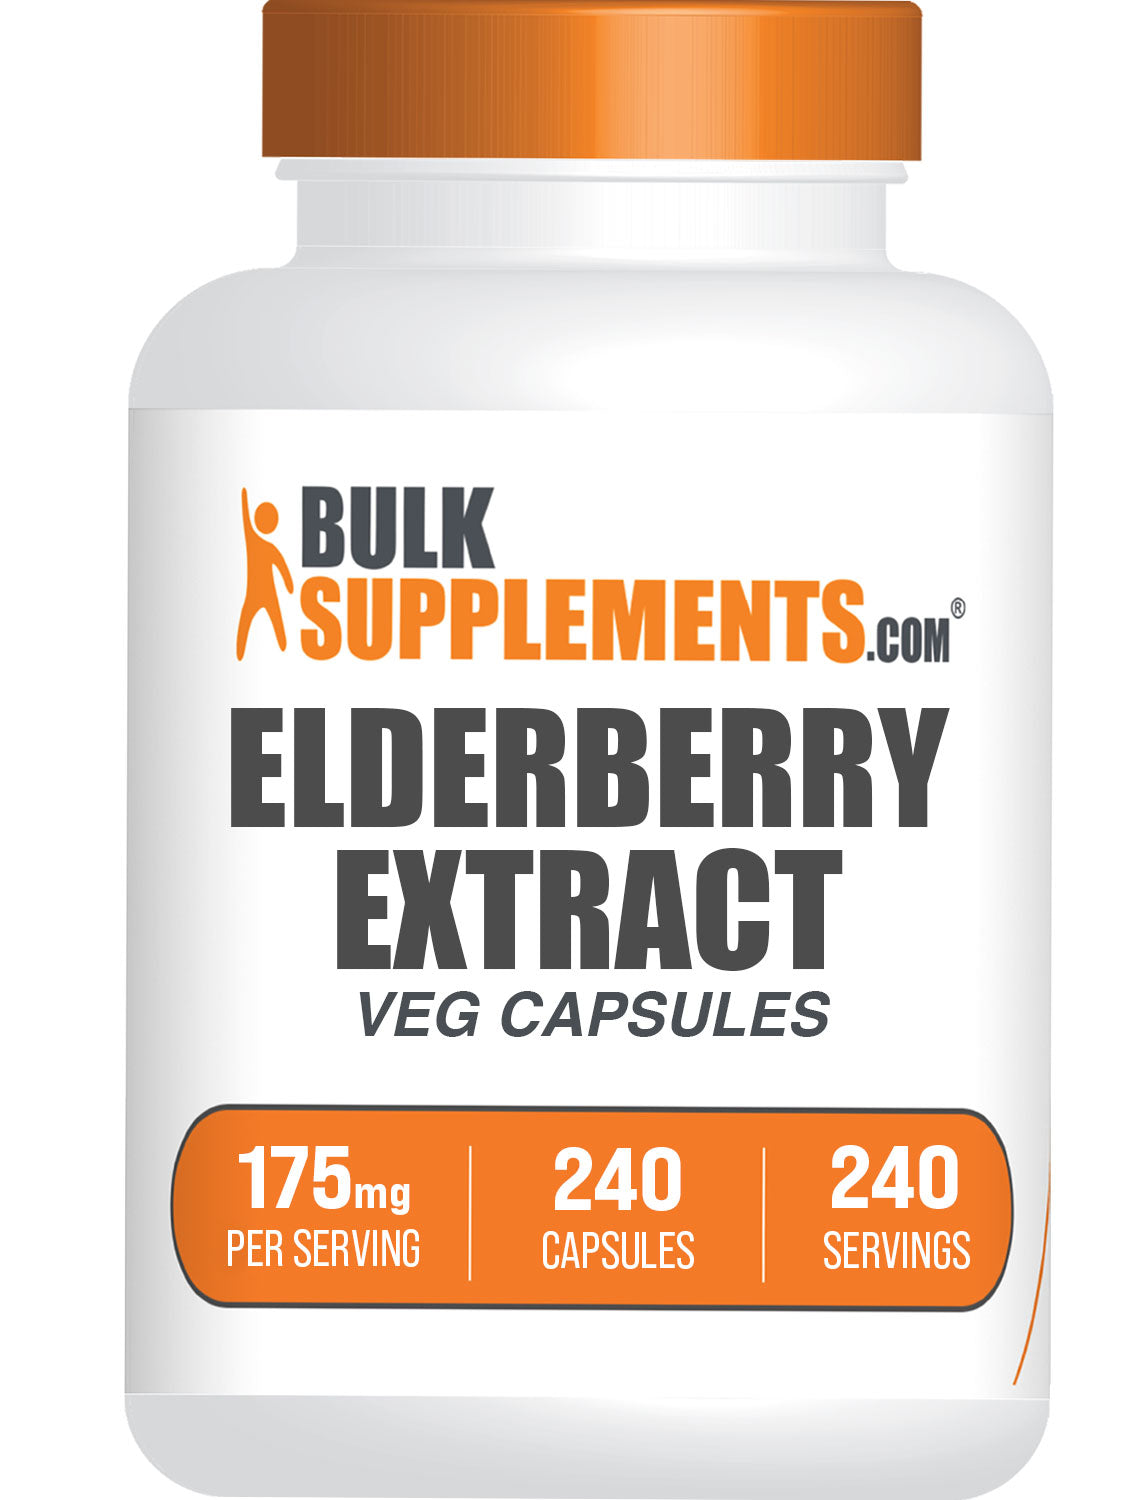 BulkSupplements.com Elderberry Extract Capsules 240 ct bottle image